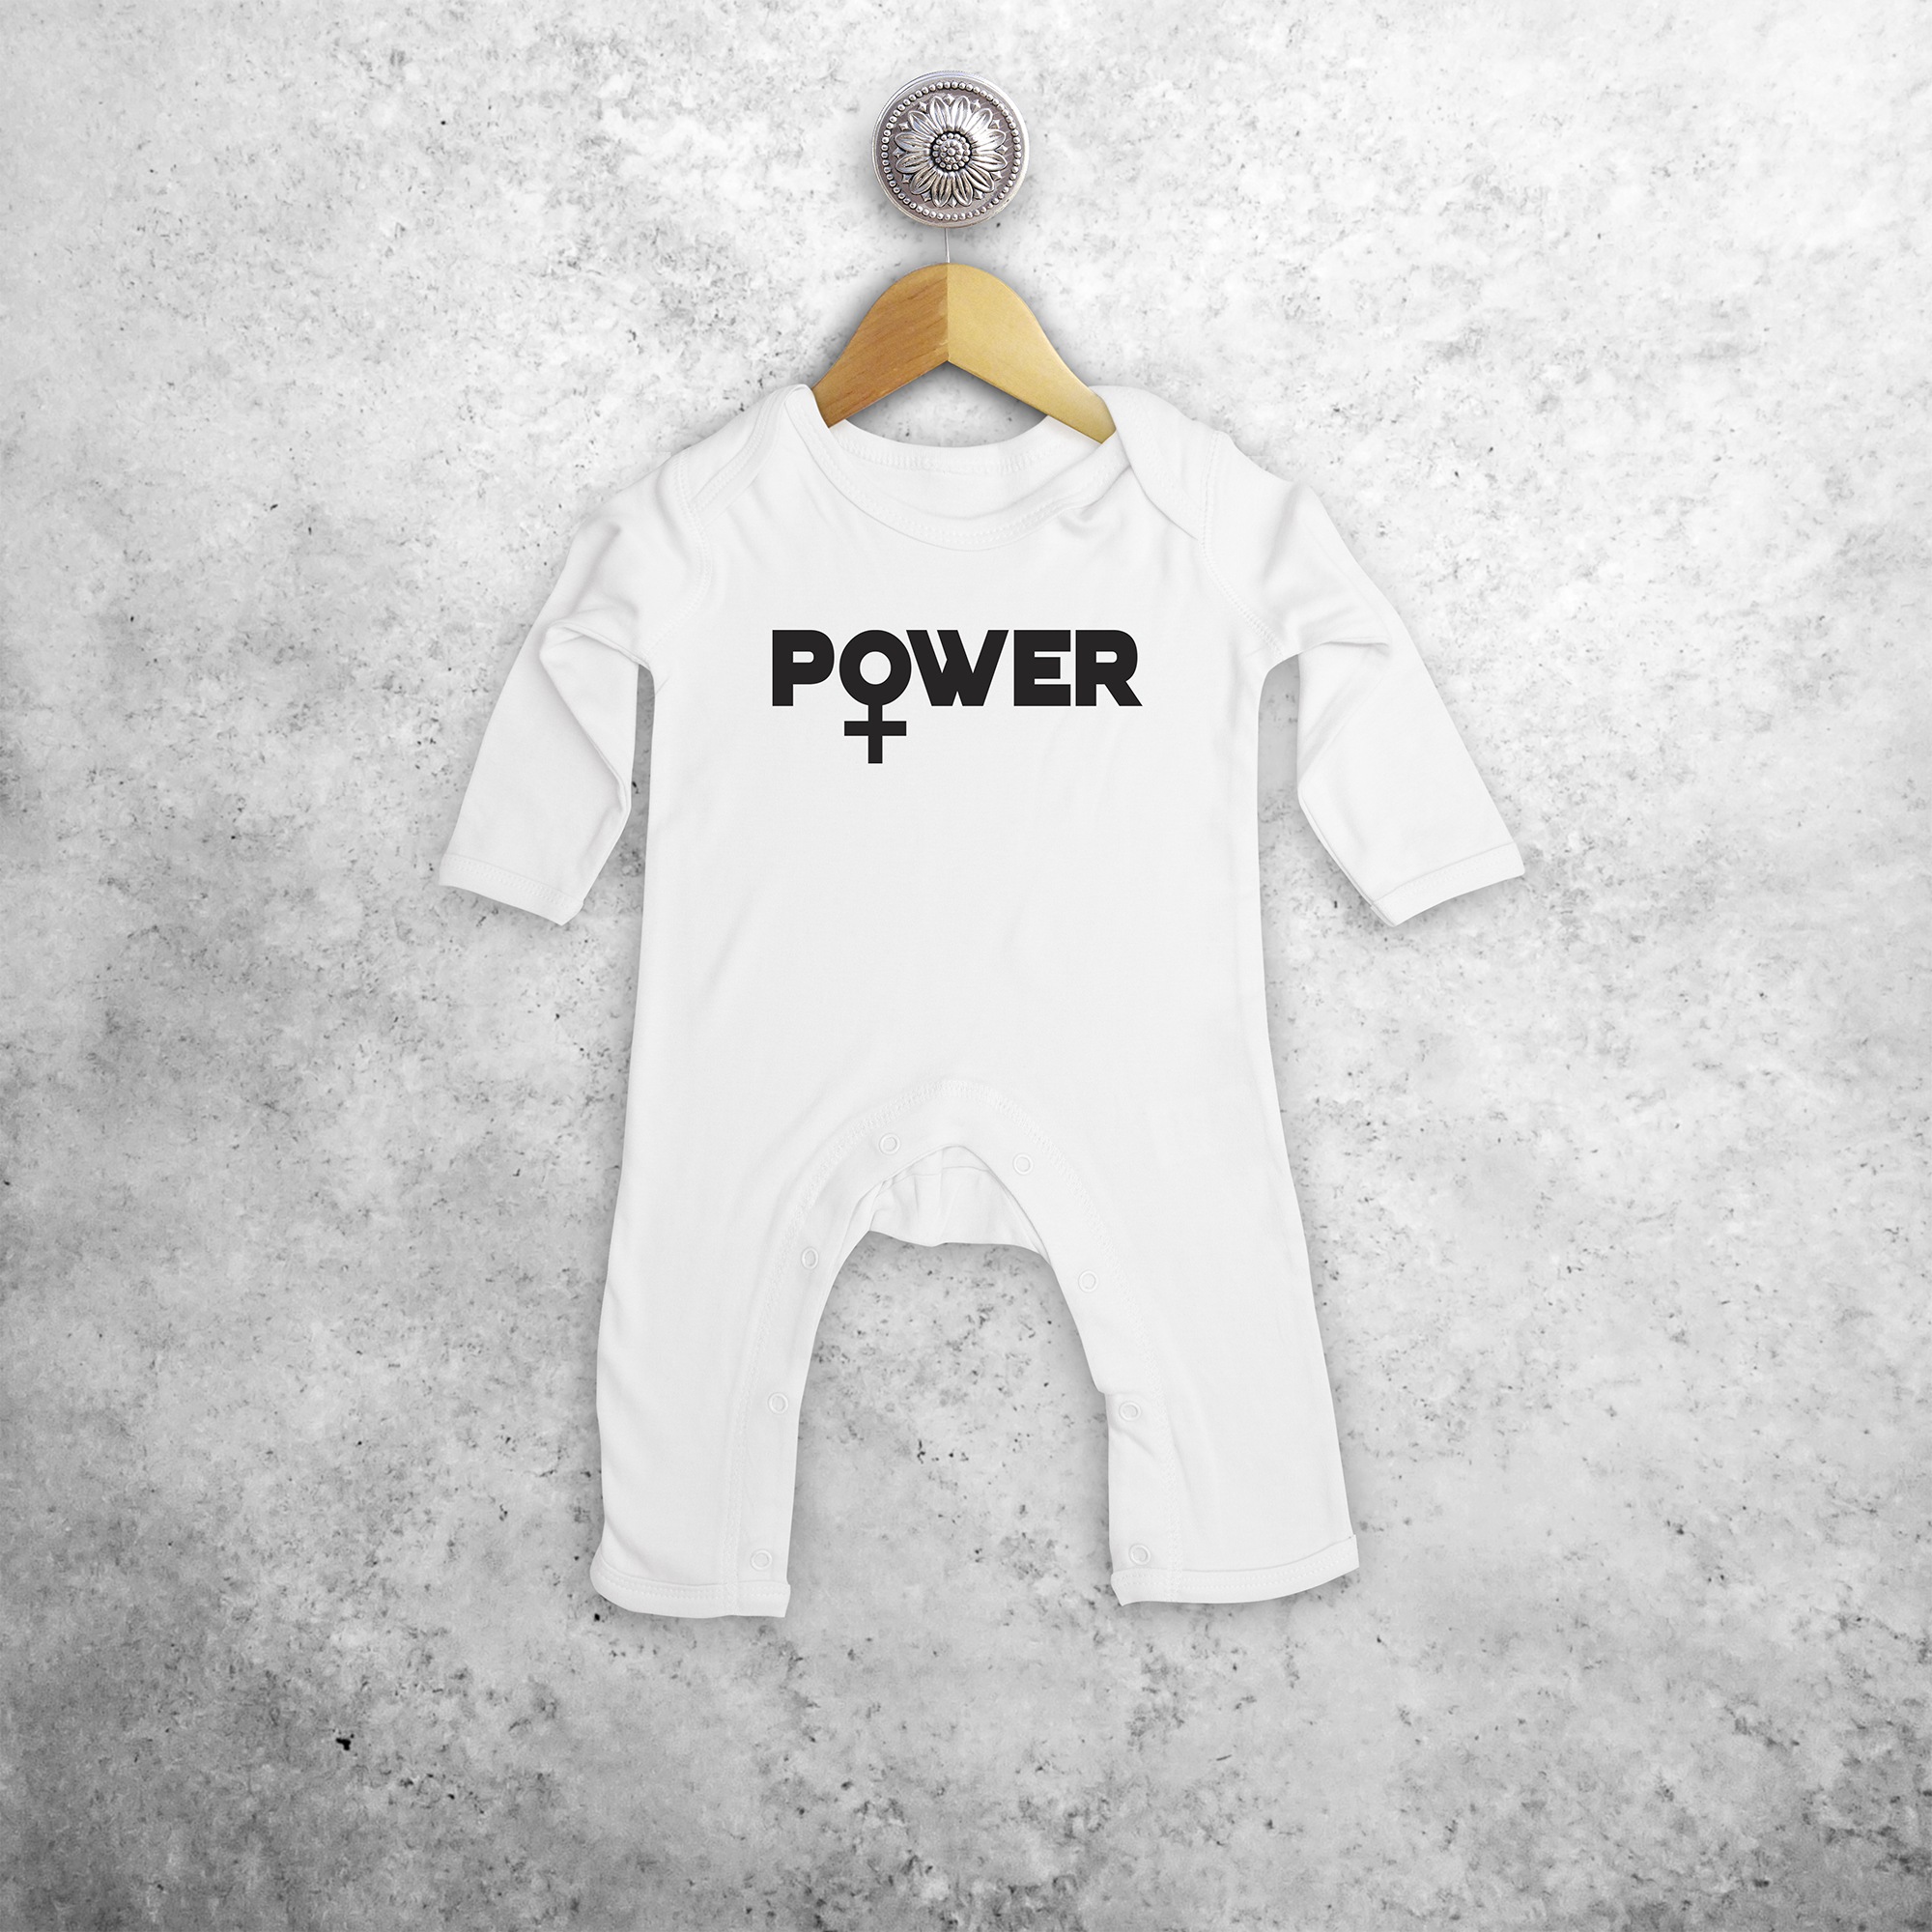 'Power' baby romper